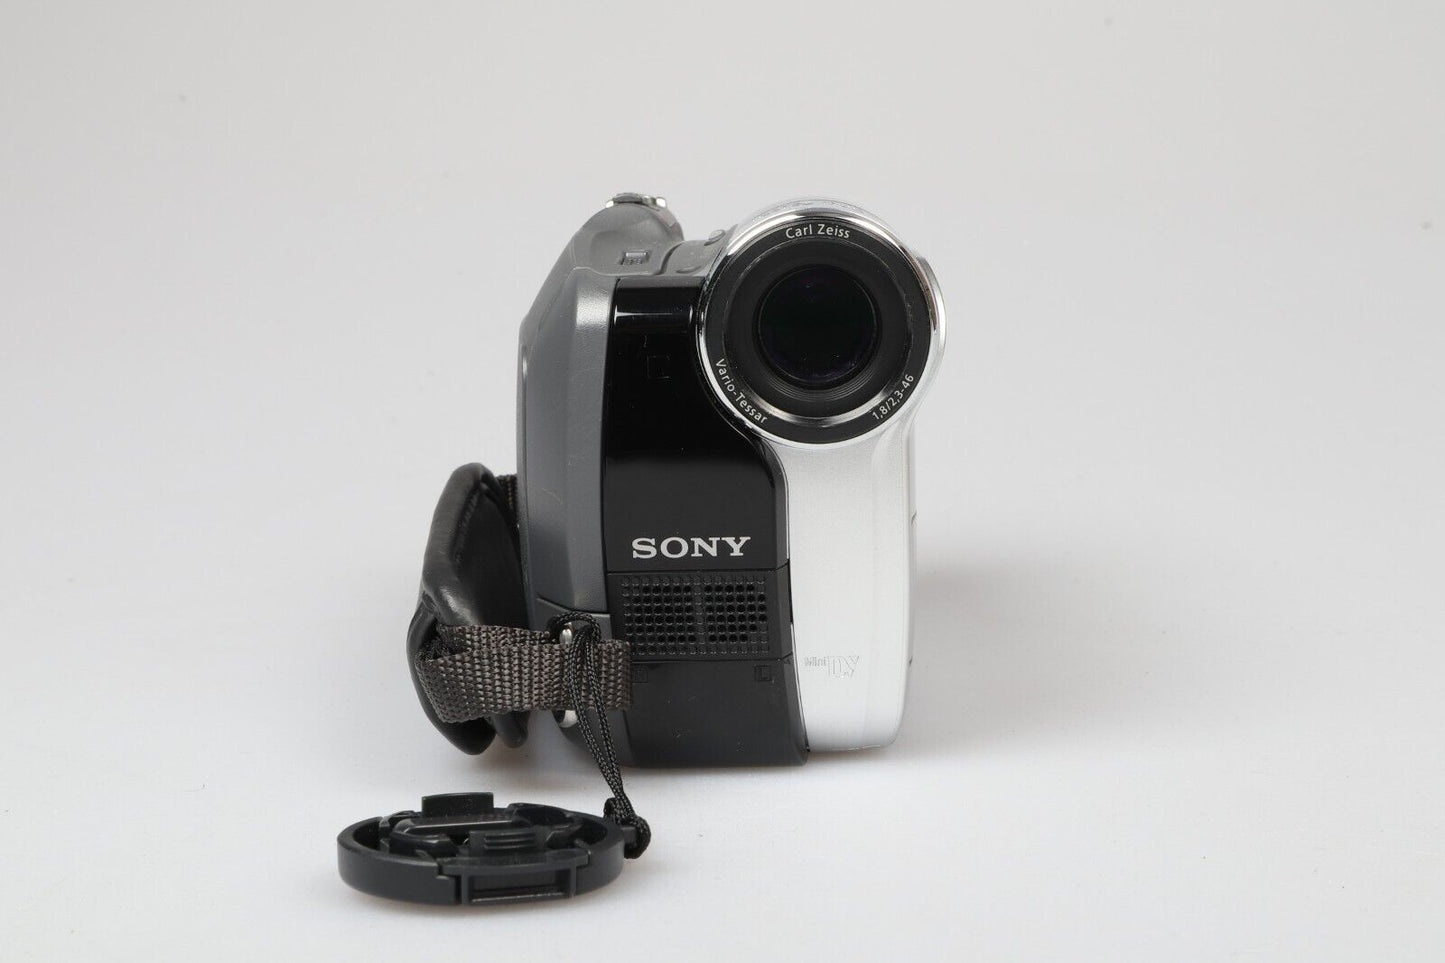 Sony Handycam DCR-HC23E | Digital Video Camcorder | Silver/Gray